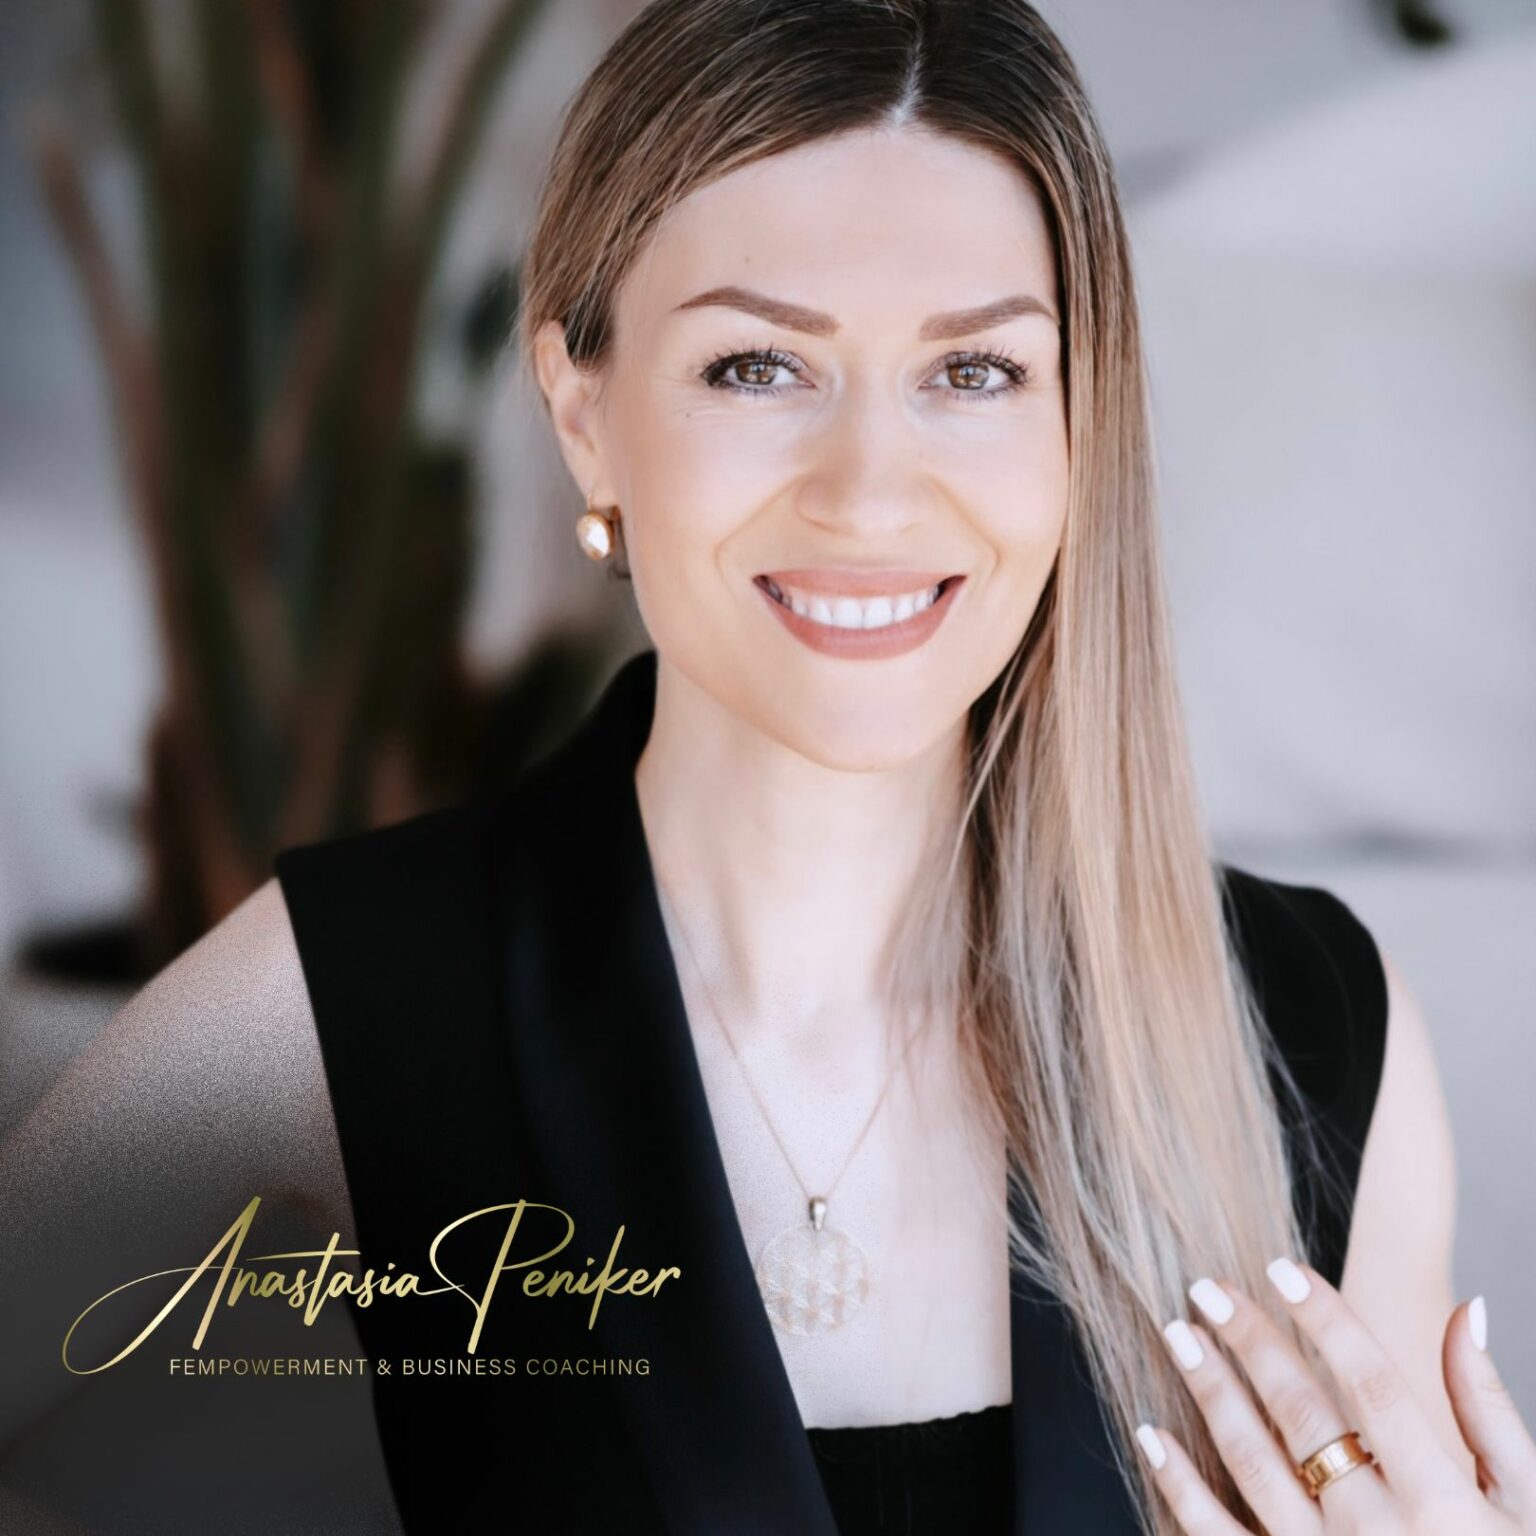 Anastasia-Peniker-Coaching-Business-Aufbau